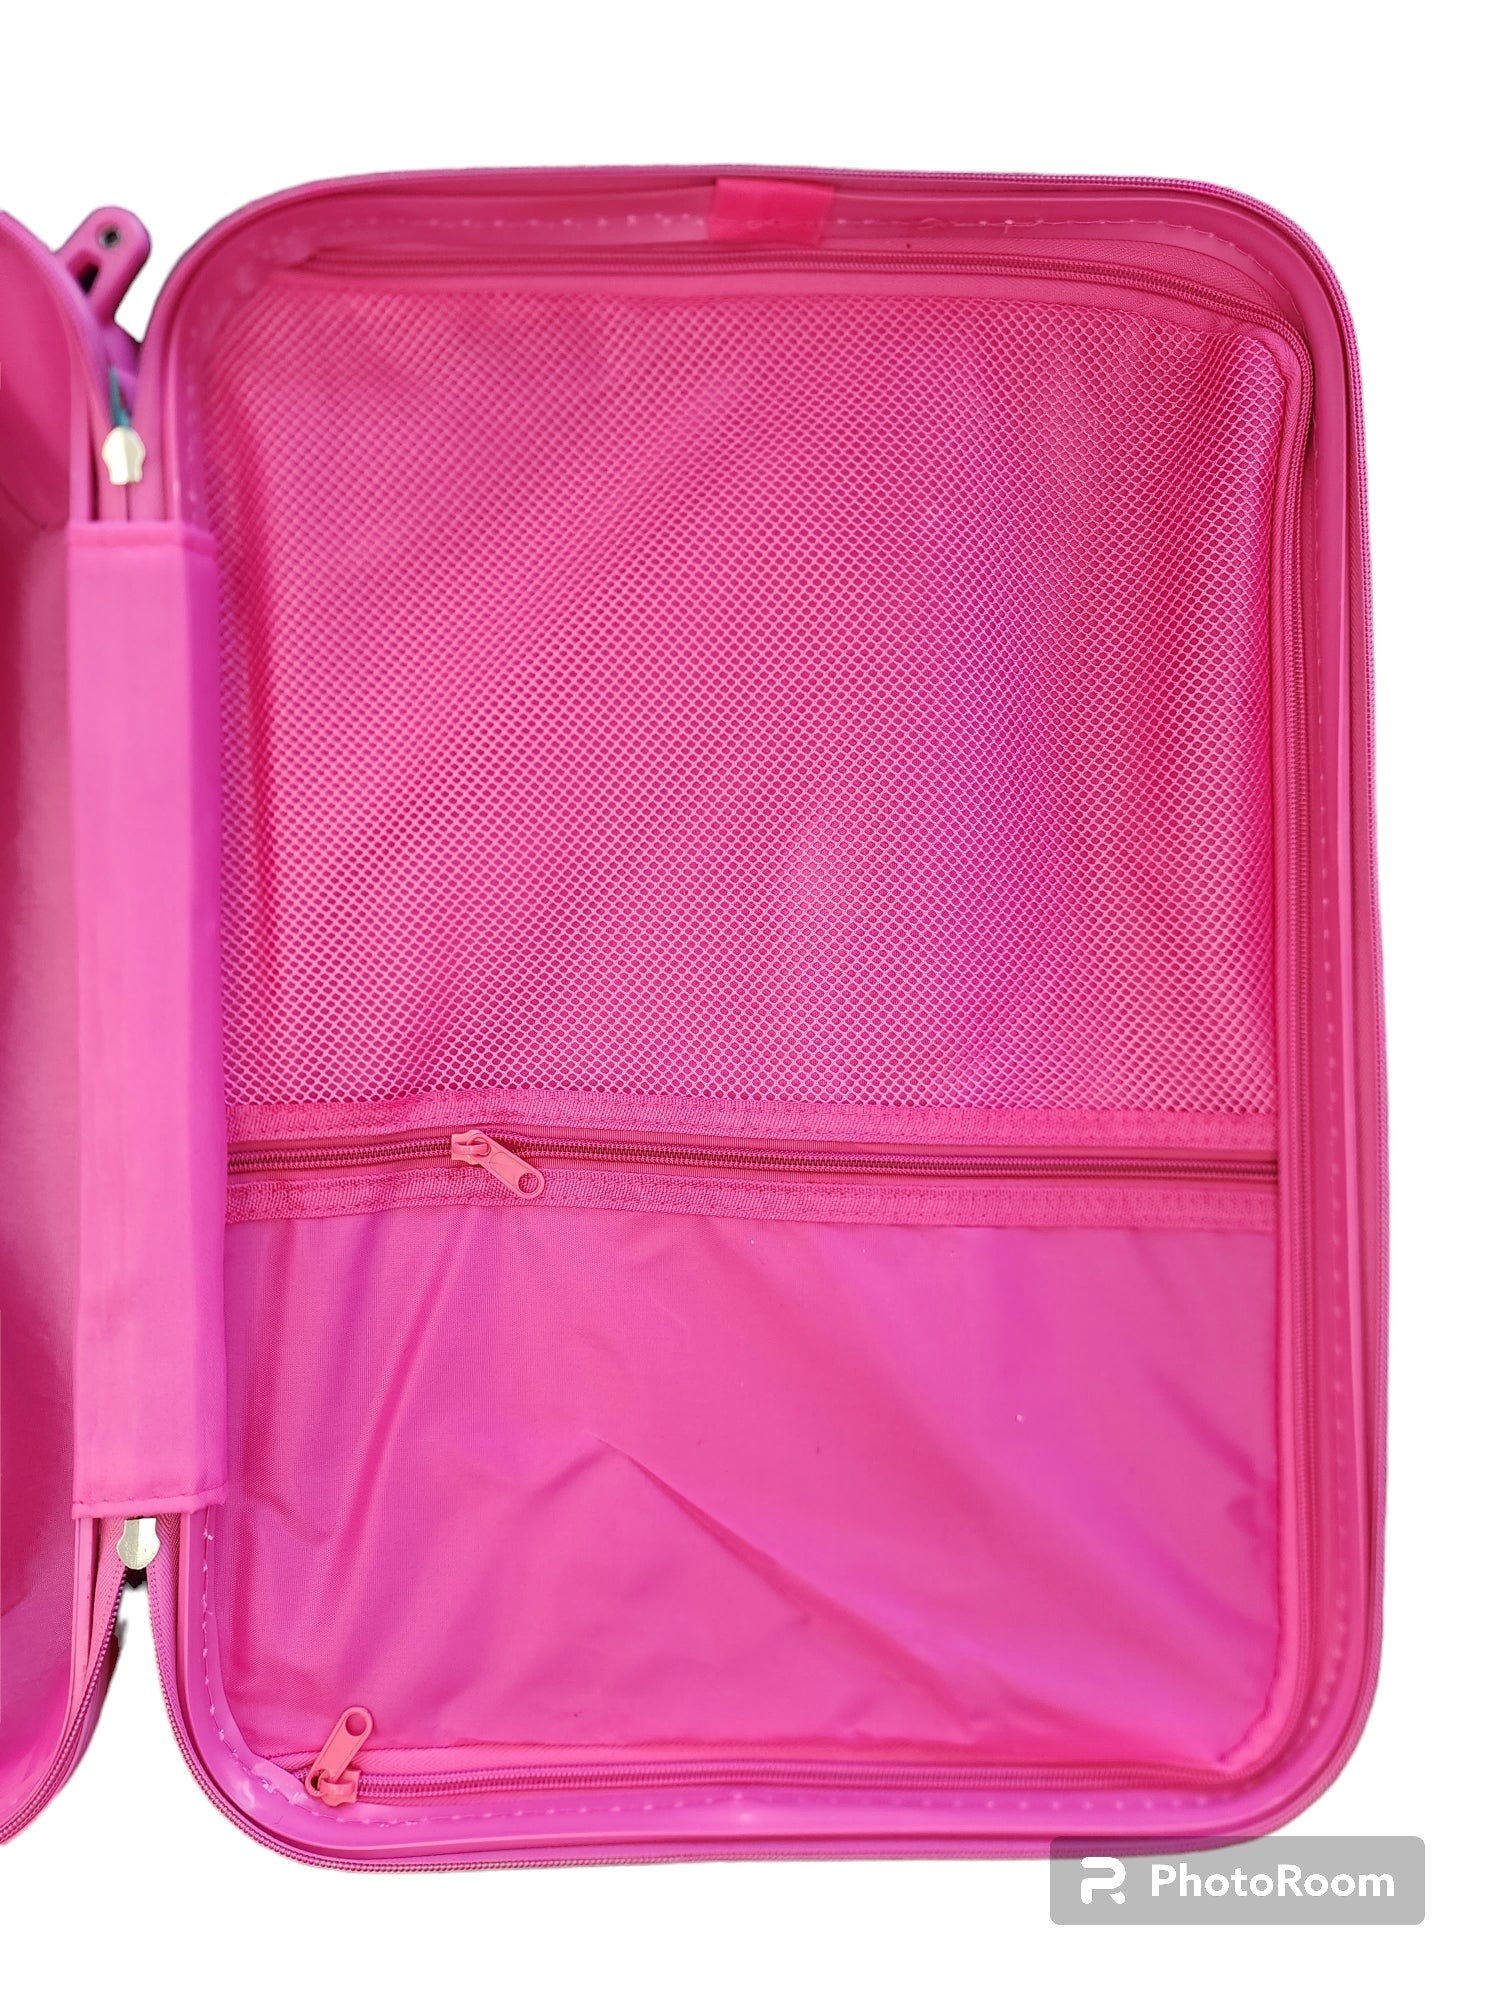 Kidz Bagz -55cm Owl print spinner suitcase - Pink-5